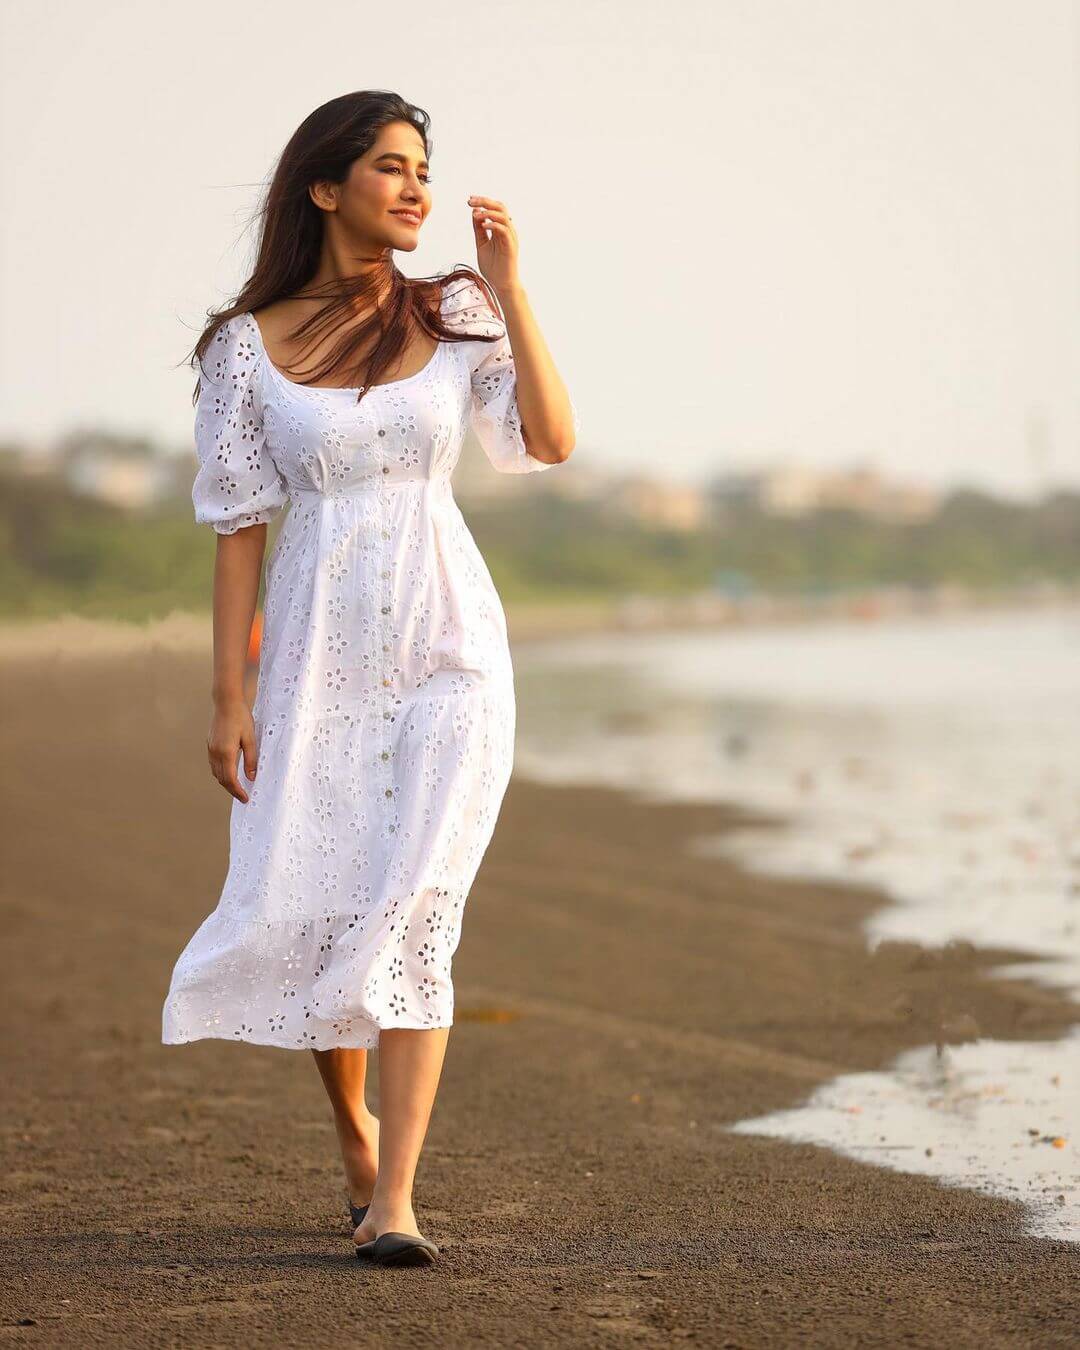 Nabha Natesh Look In Elegant White Dress Gives Us Vacay Vibes